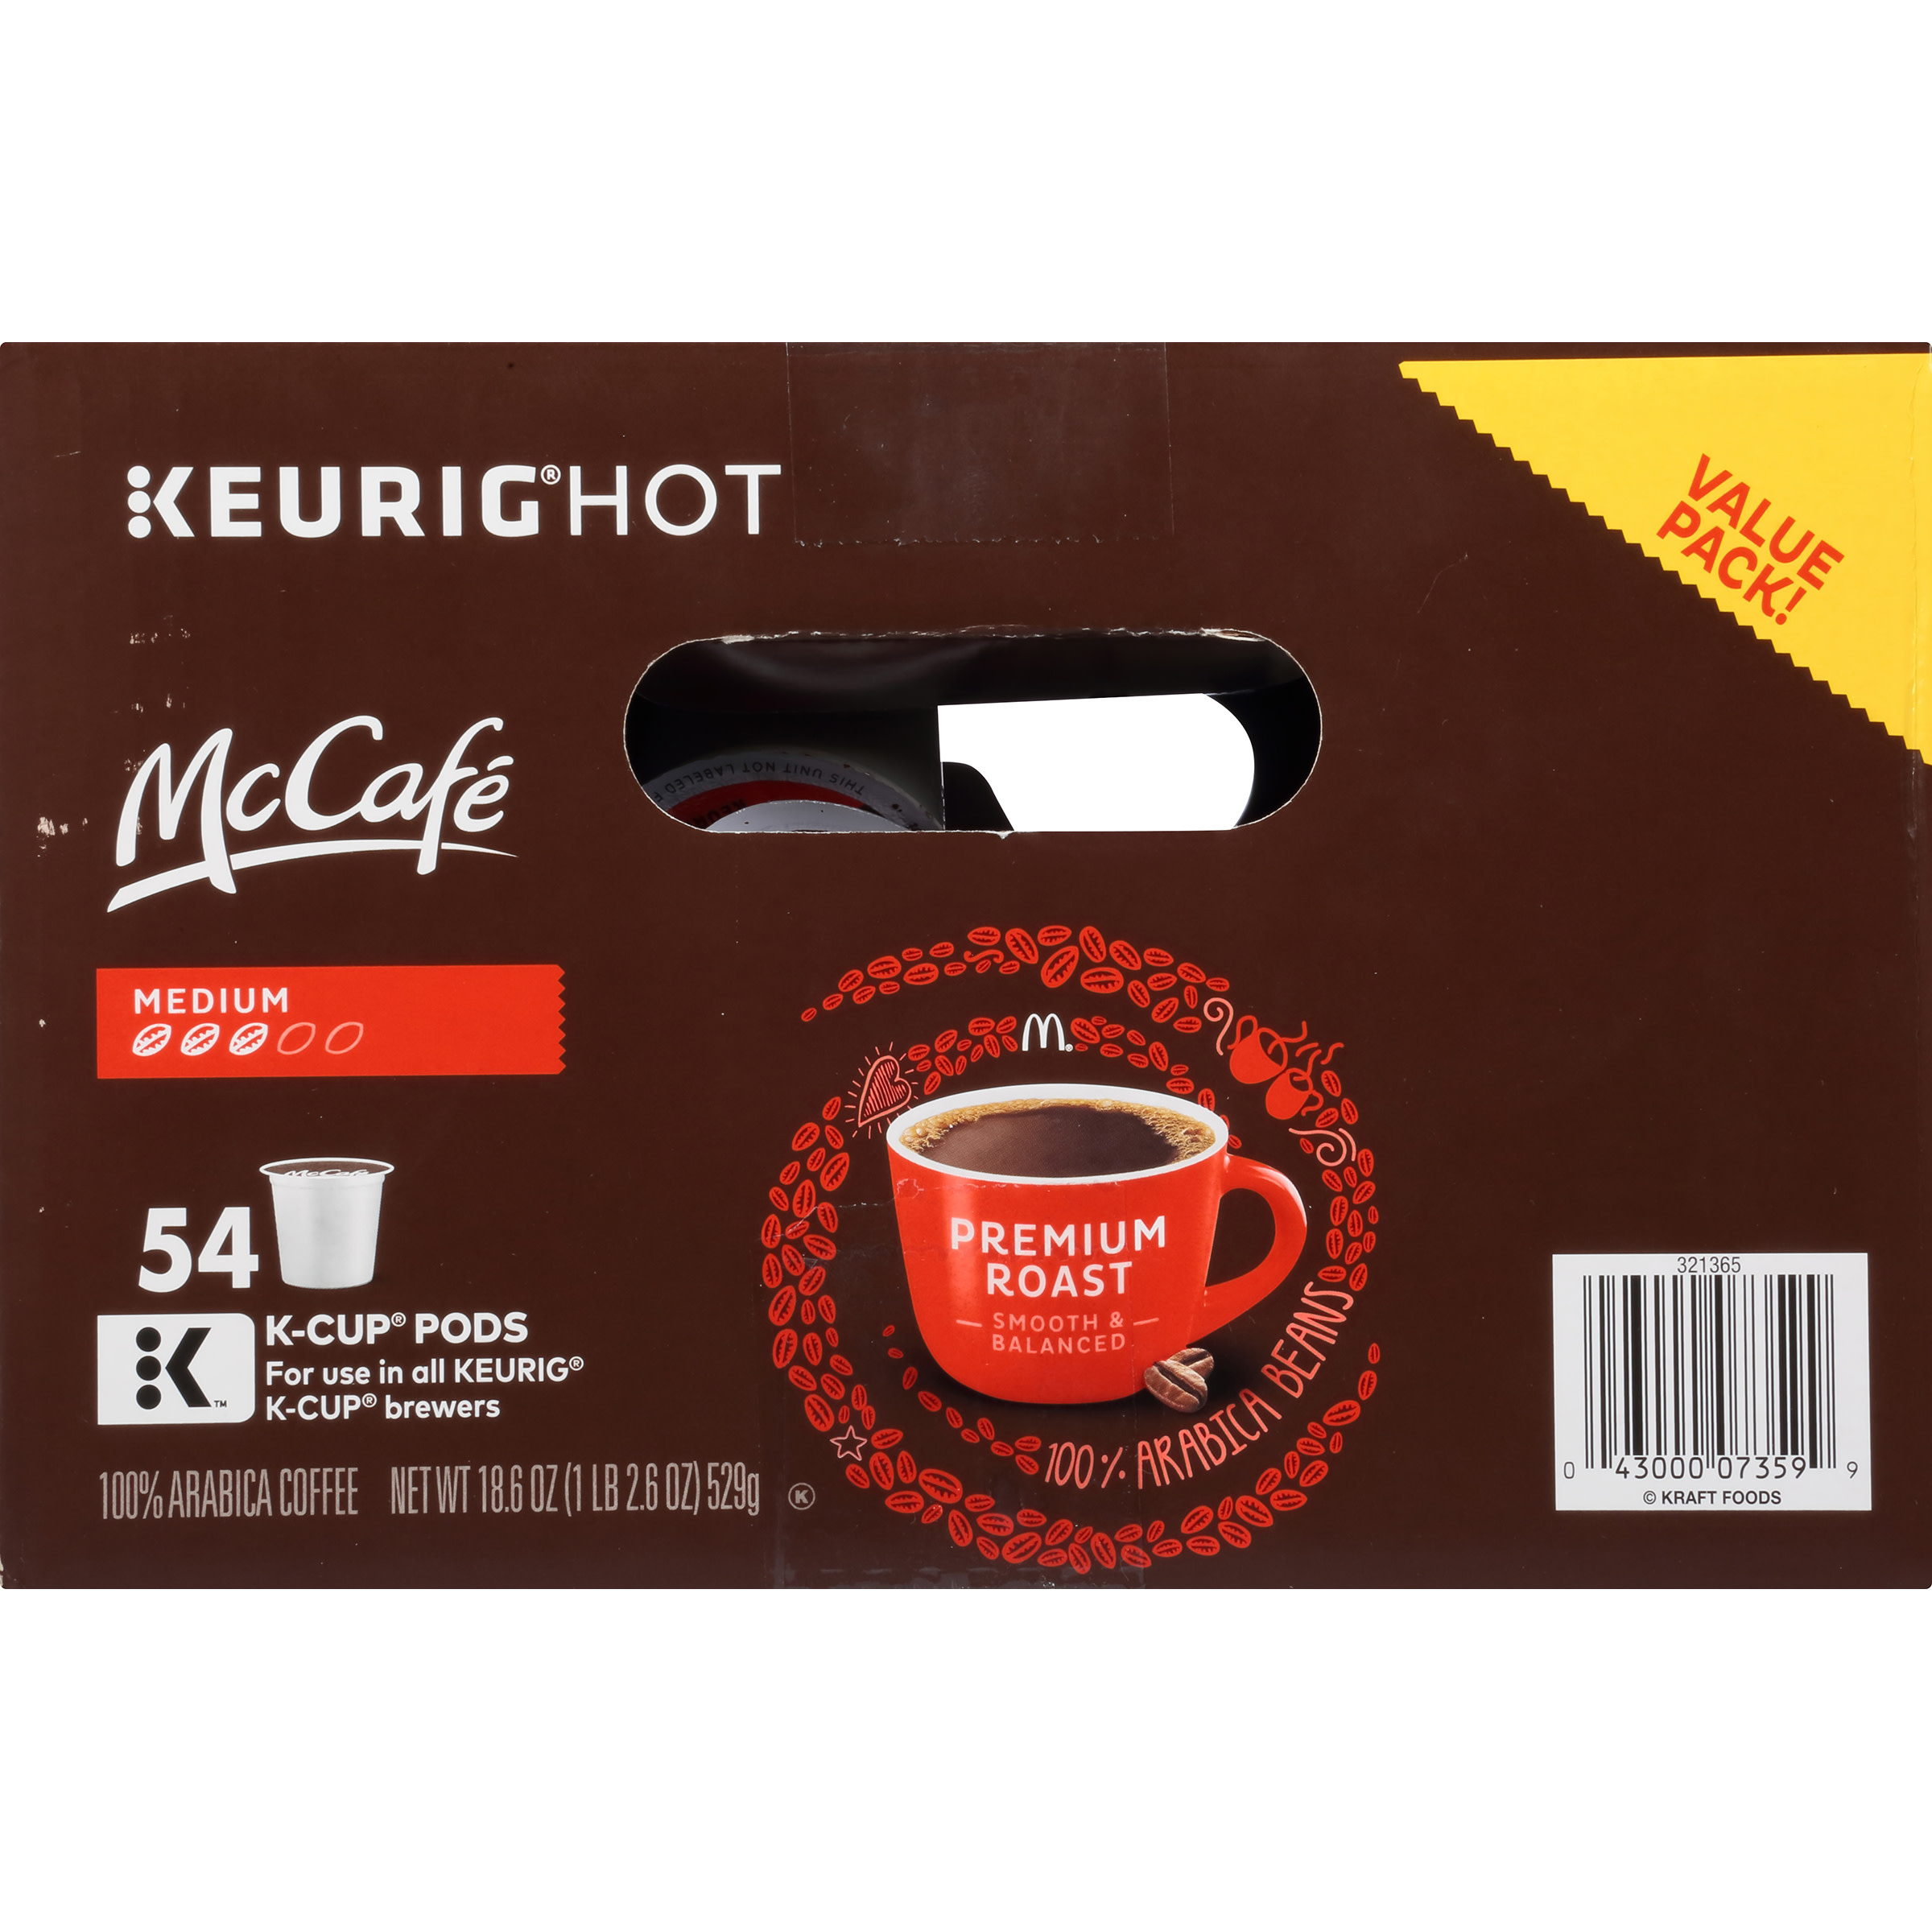 McCafe Premium Roast Medium Coffee K-Cup Pods, 54 ct - 18.6 oz Box - image 6 of 7